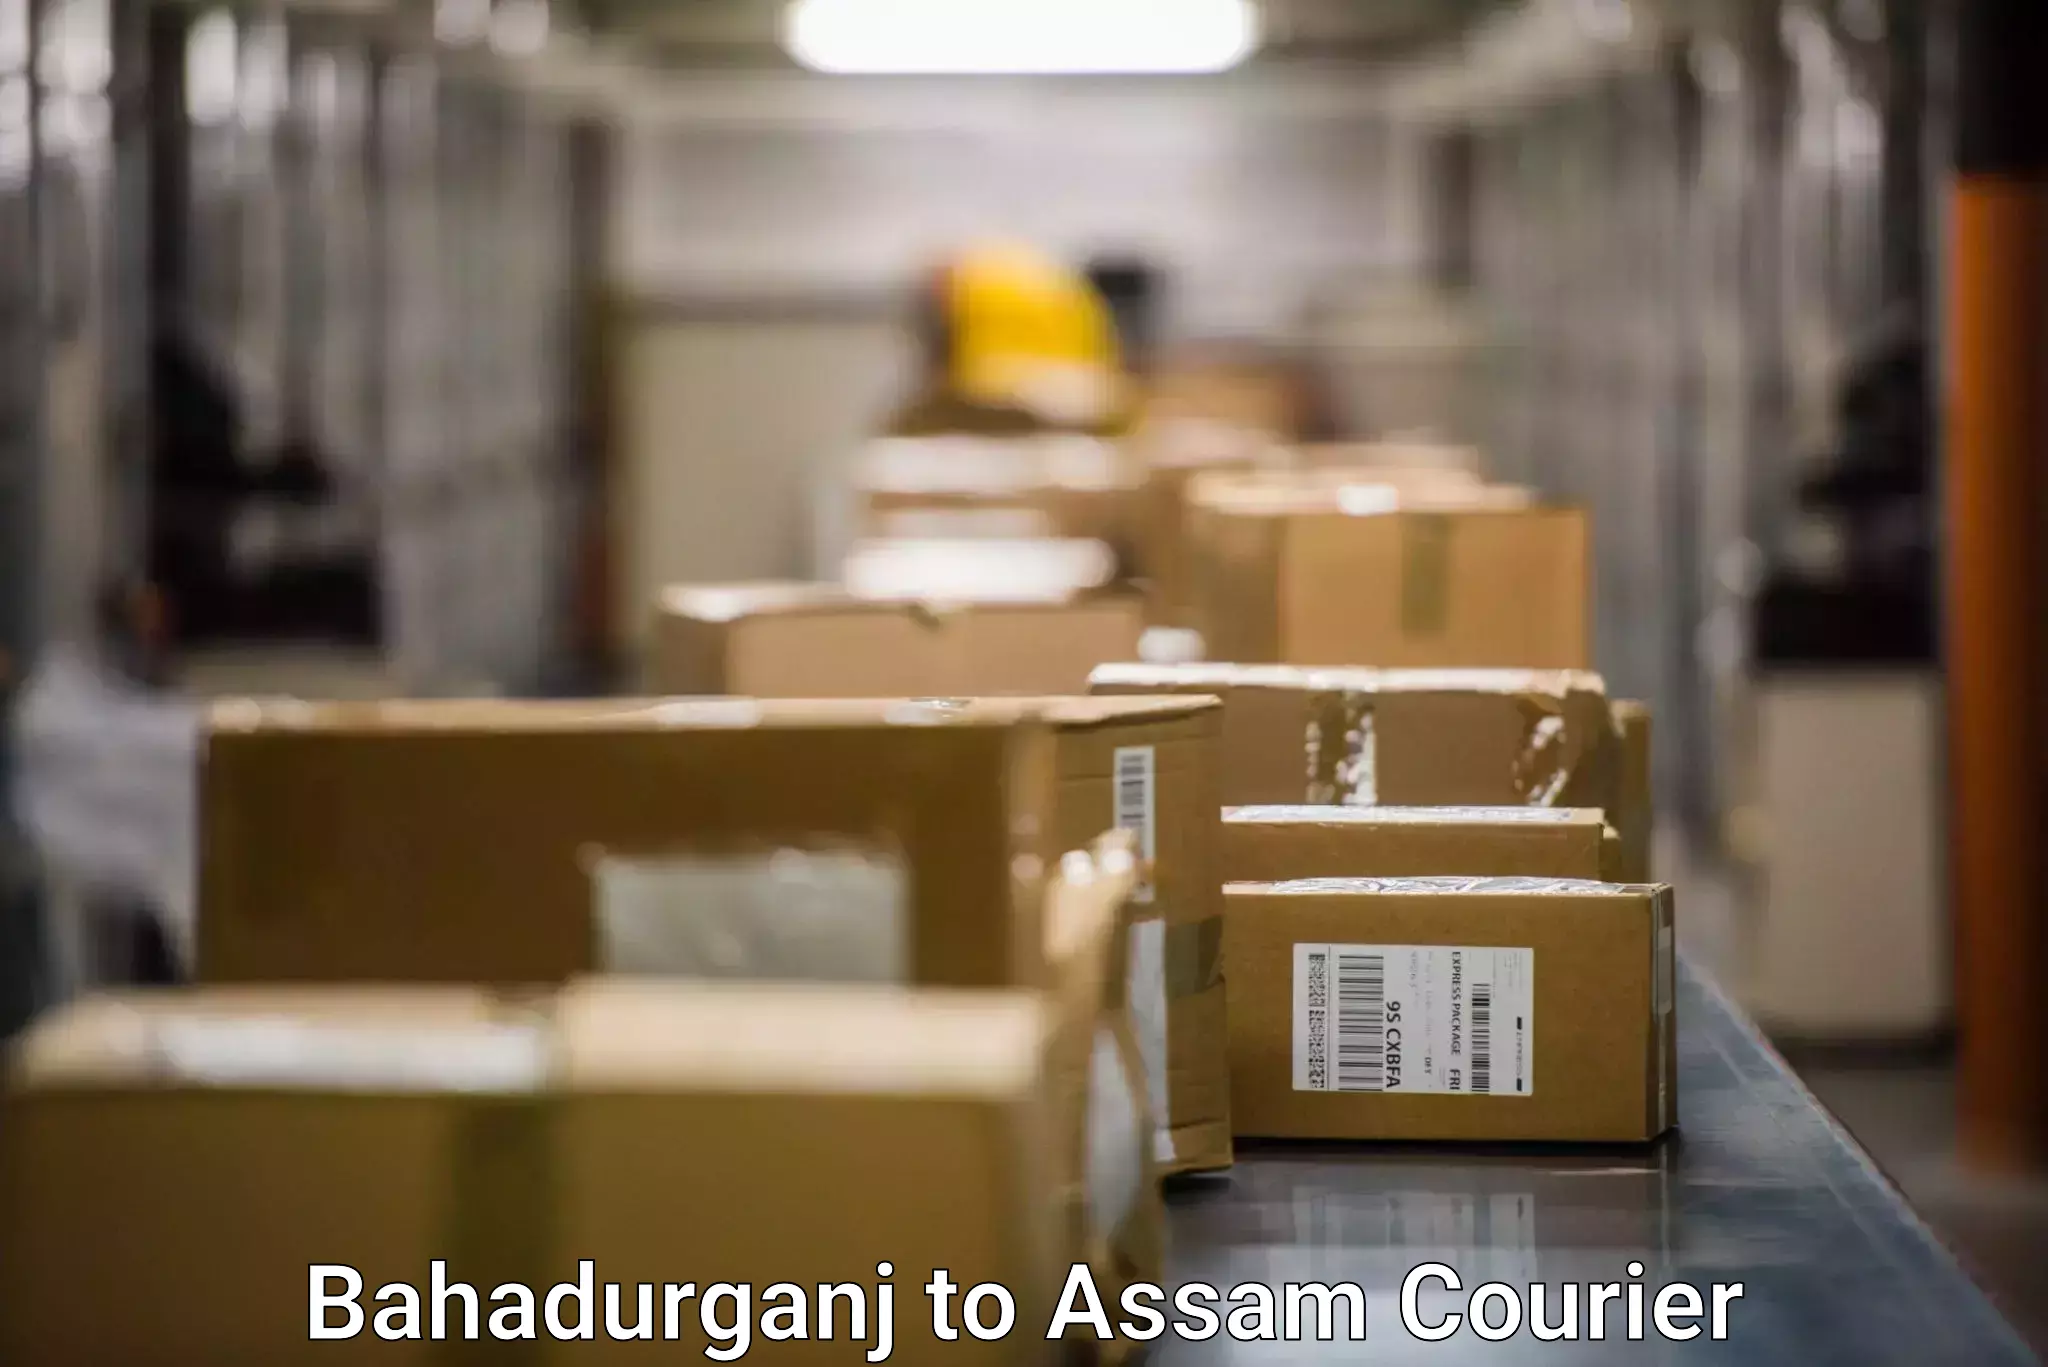 Next-day delivery options Bahadurganj to Banderdewa